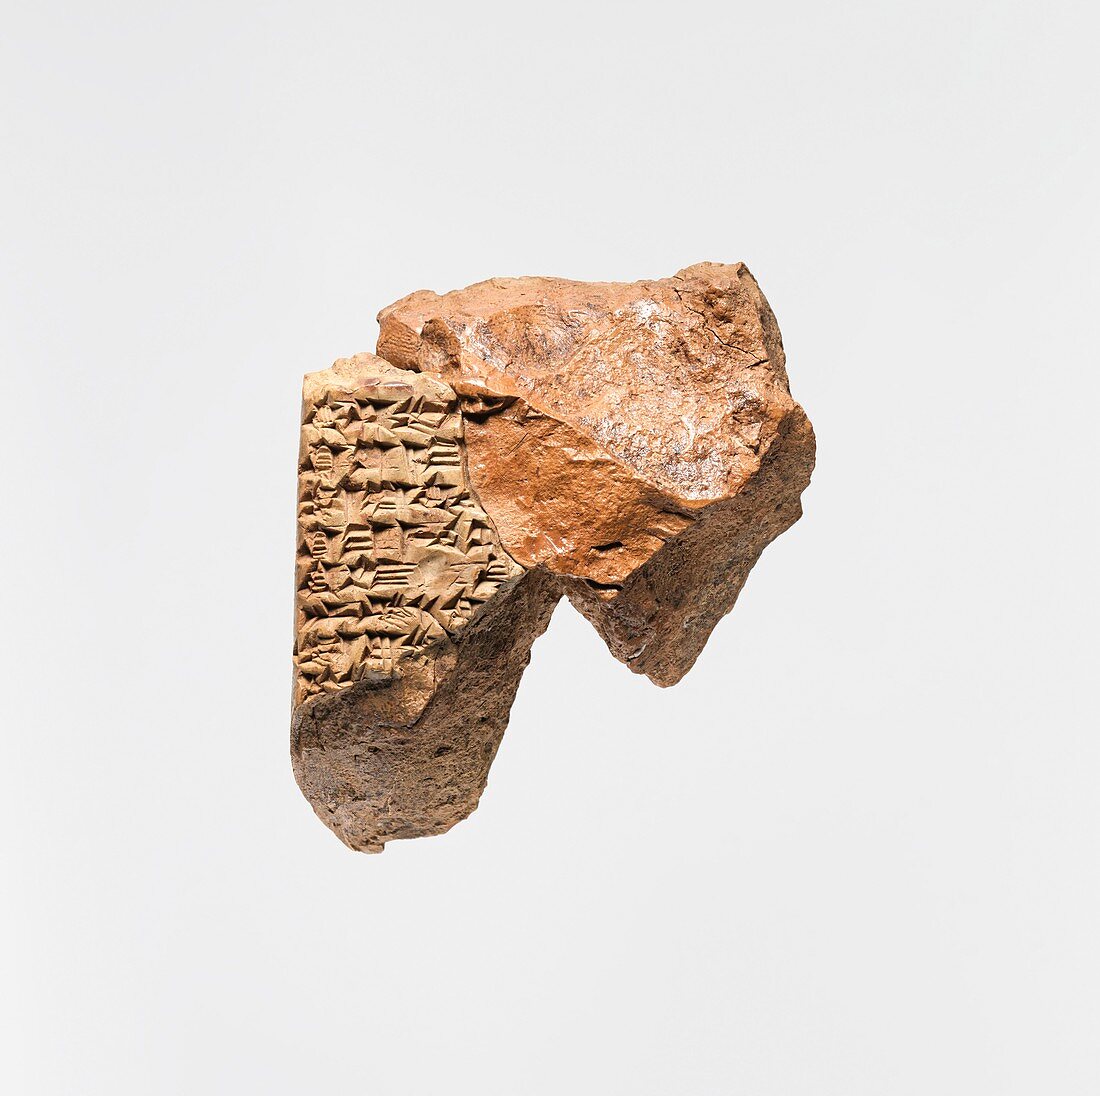 Cuneiform inscription, 7th-6th century BC